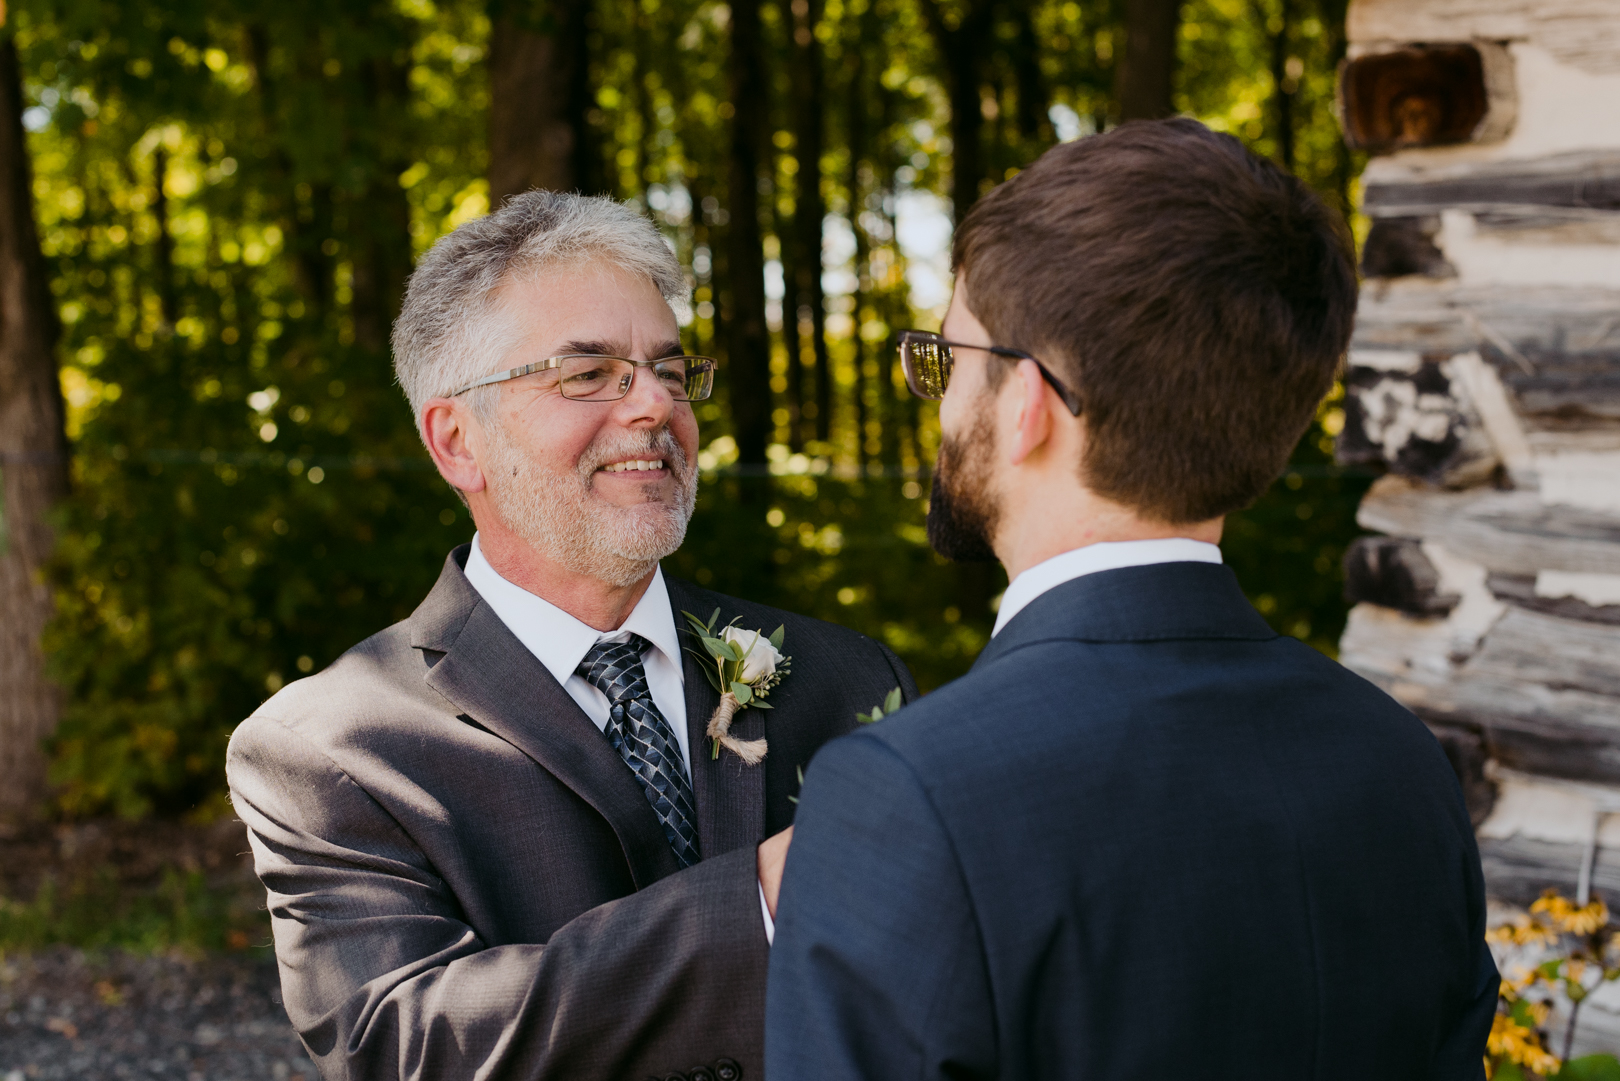 groom's father adjusting the groom's tie